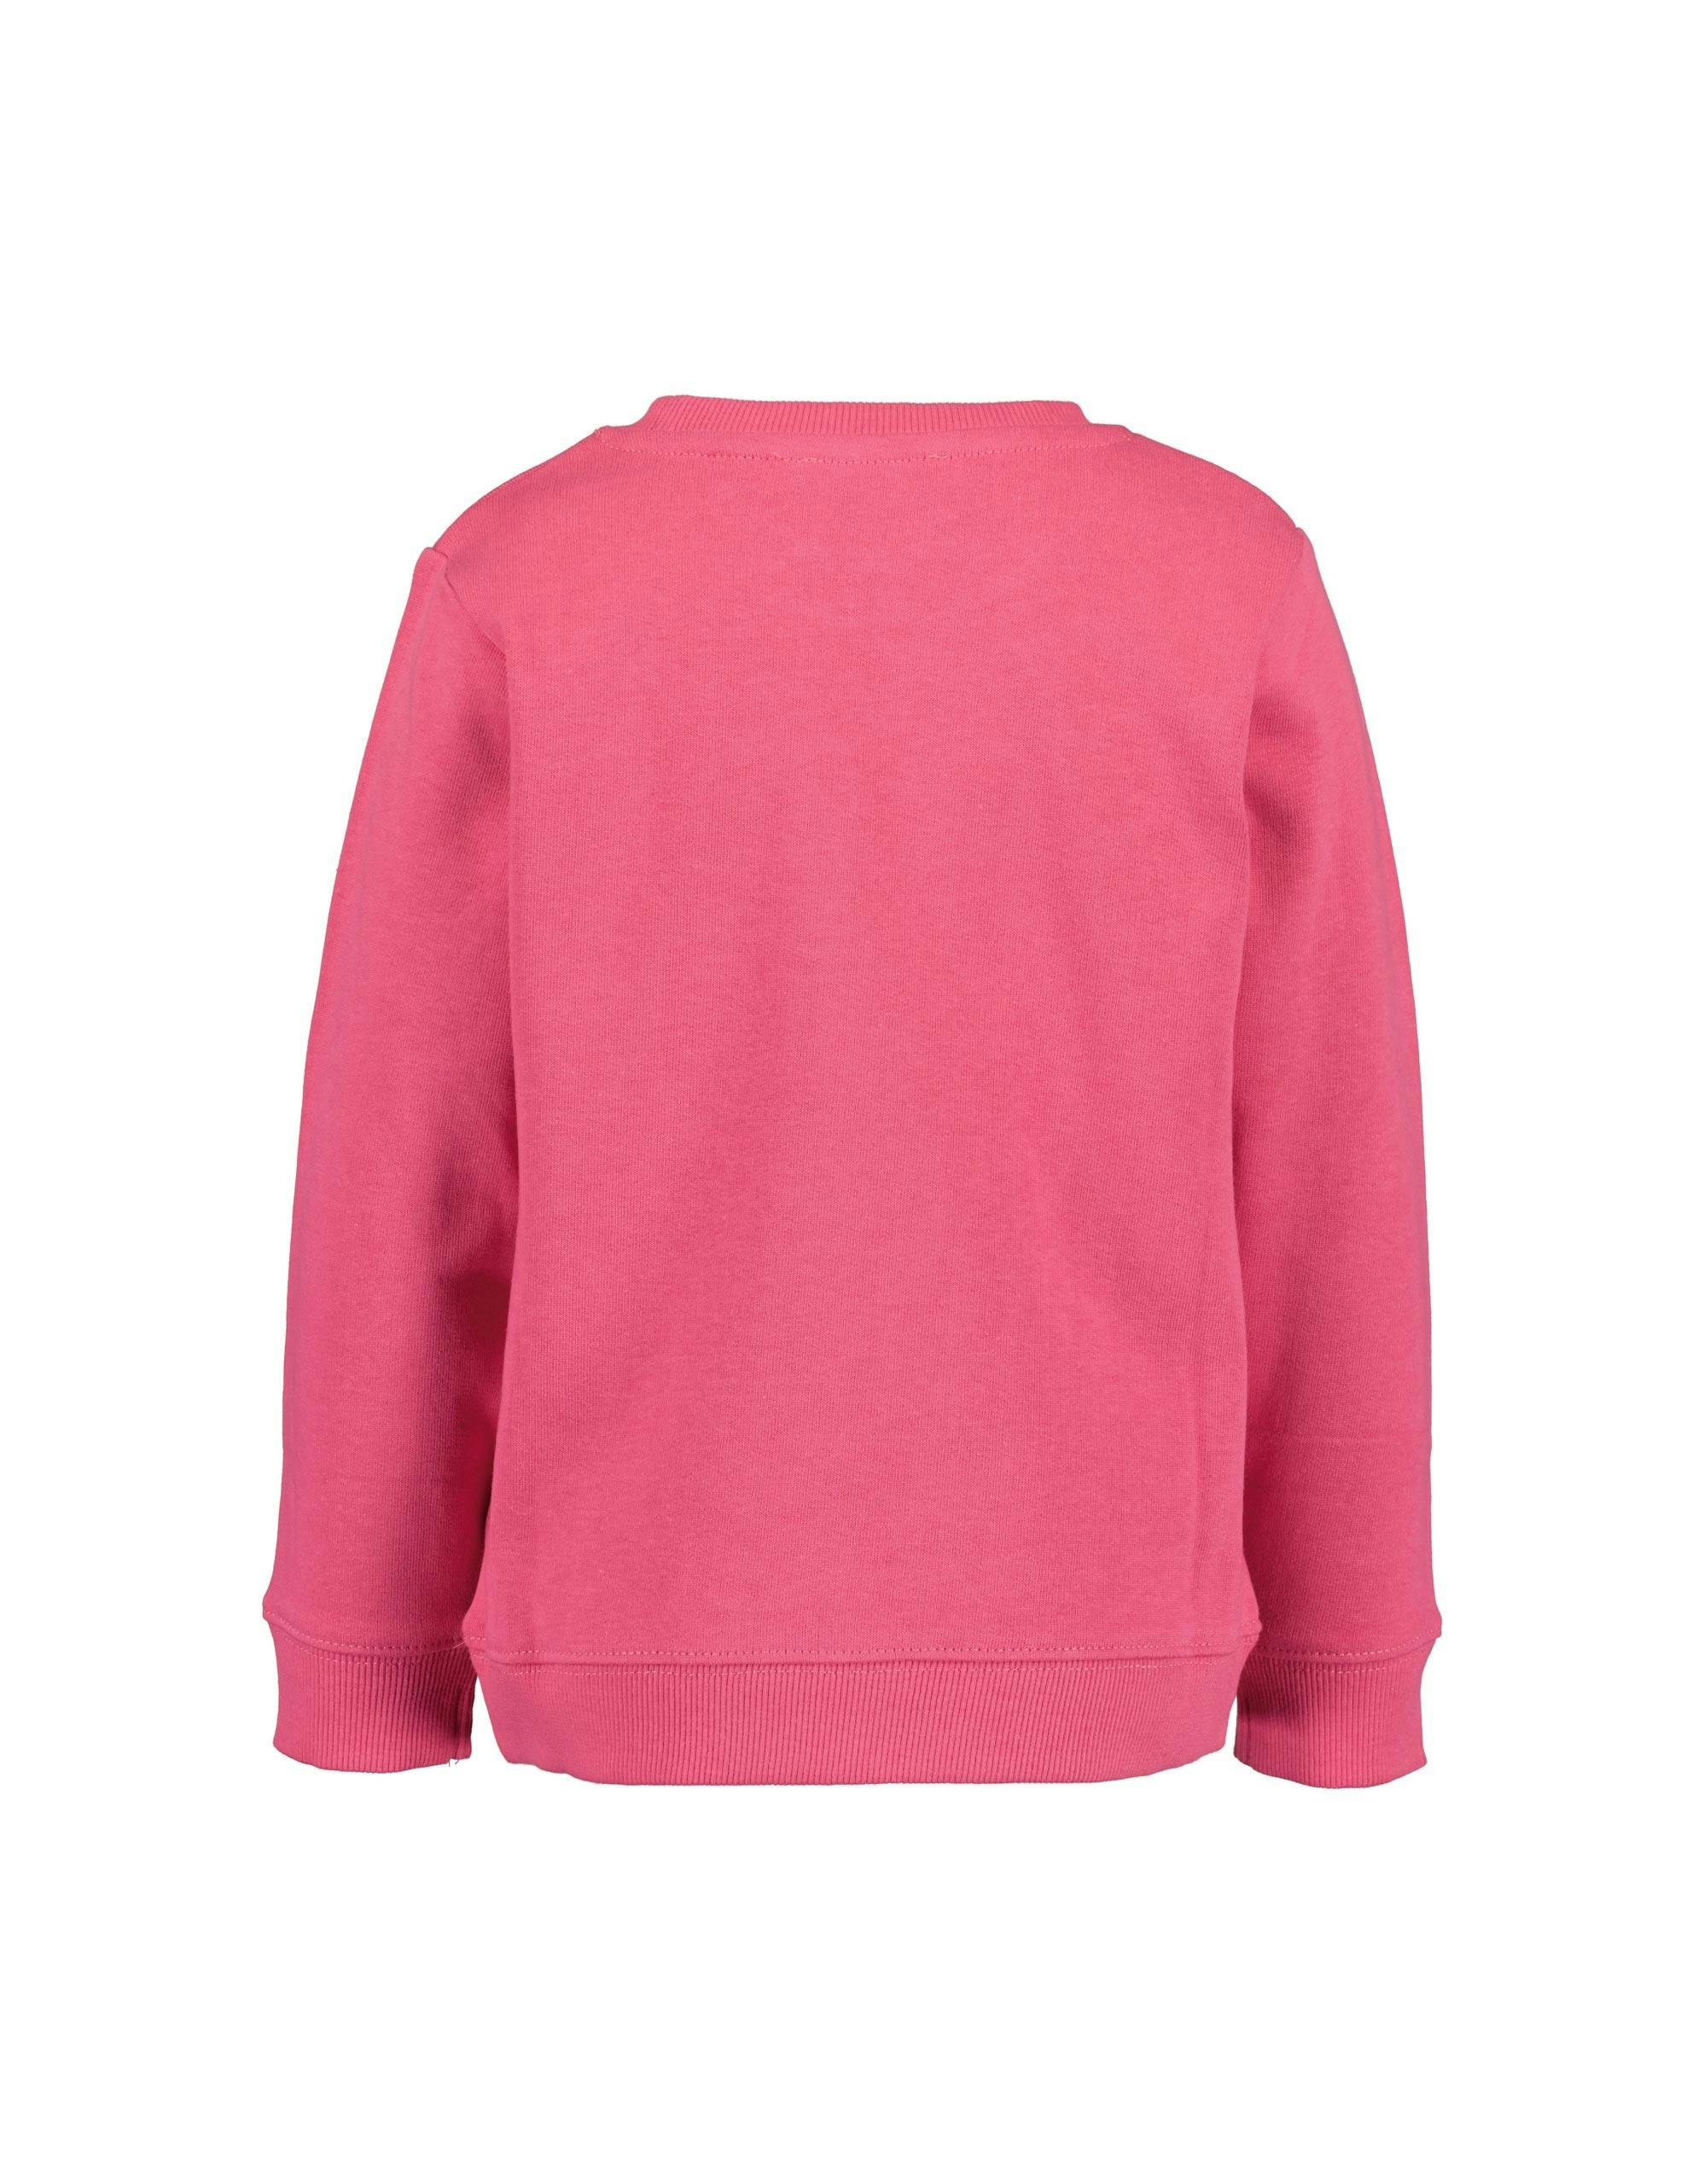 Zara sweatshirt Rabatt 67 % KINDER Pullovers & Sweatshirts Pailletten Rosa 128 